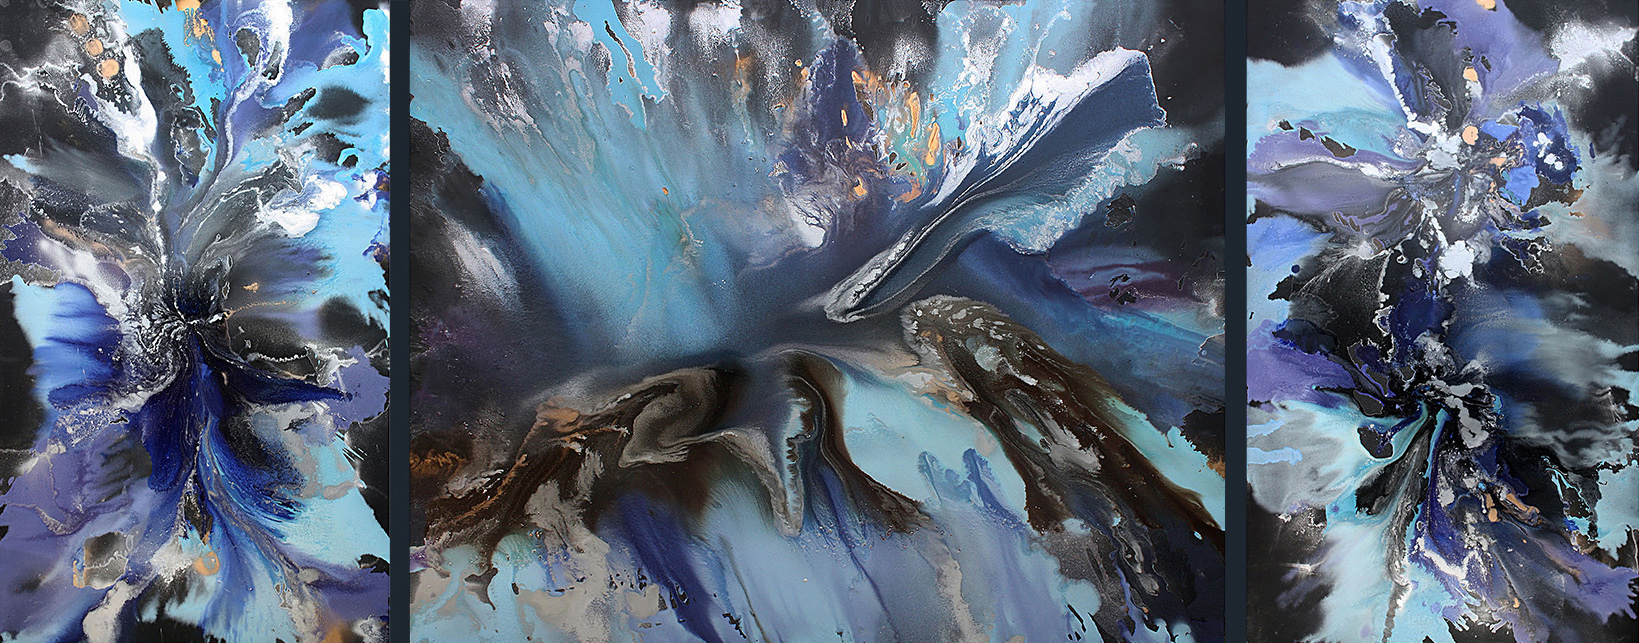  - Caspian Waves - 167 x 407 oil on canvas 2015